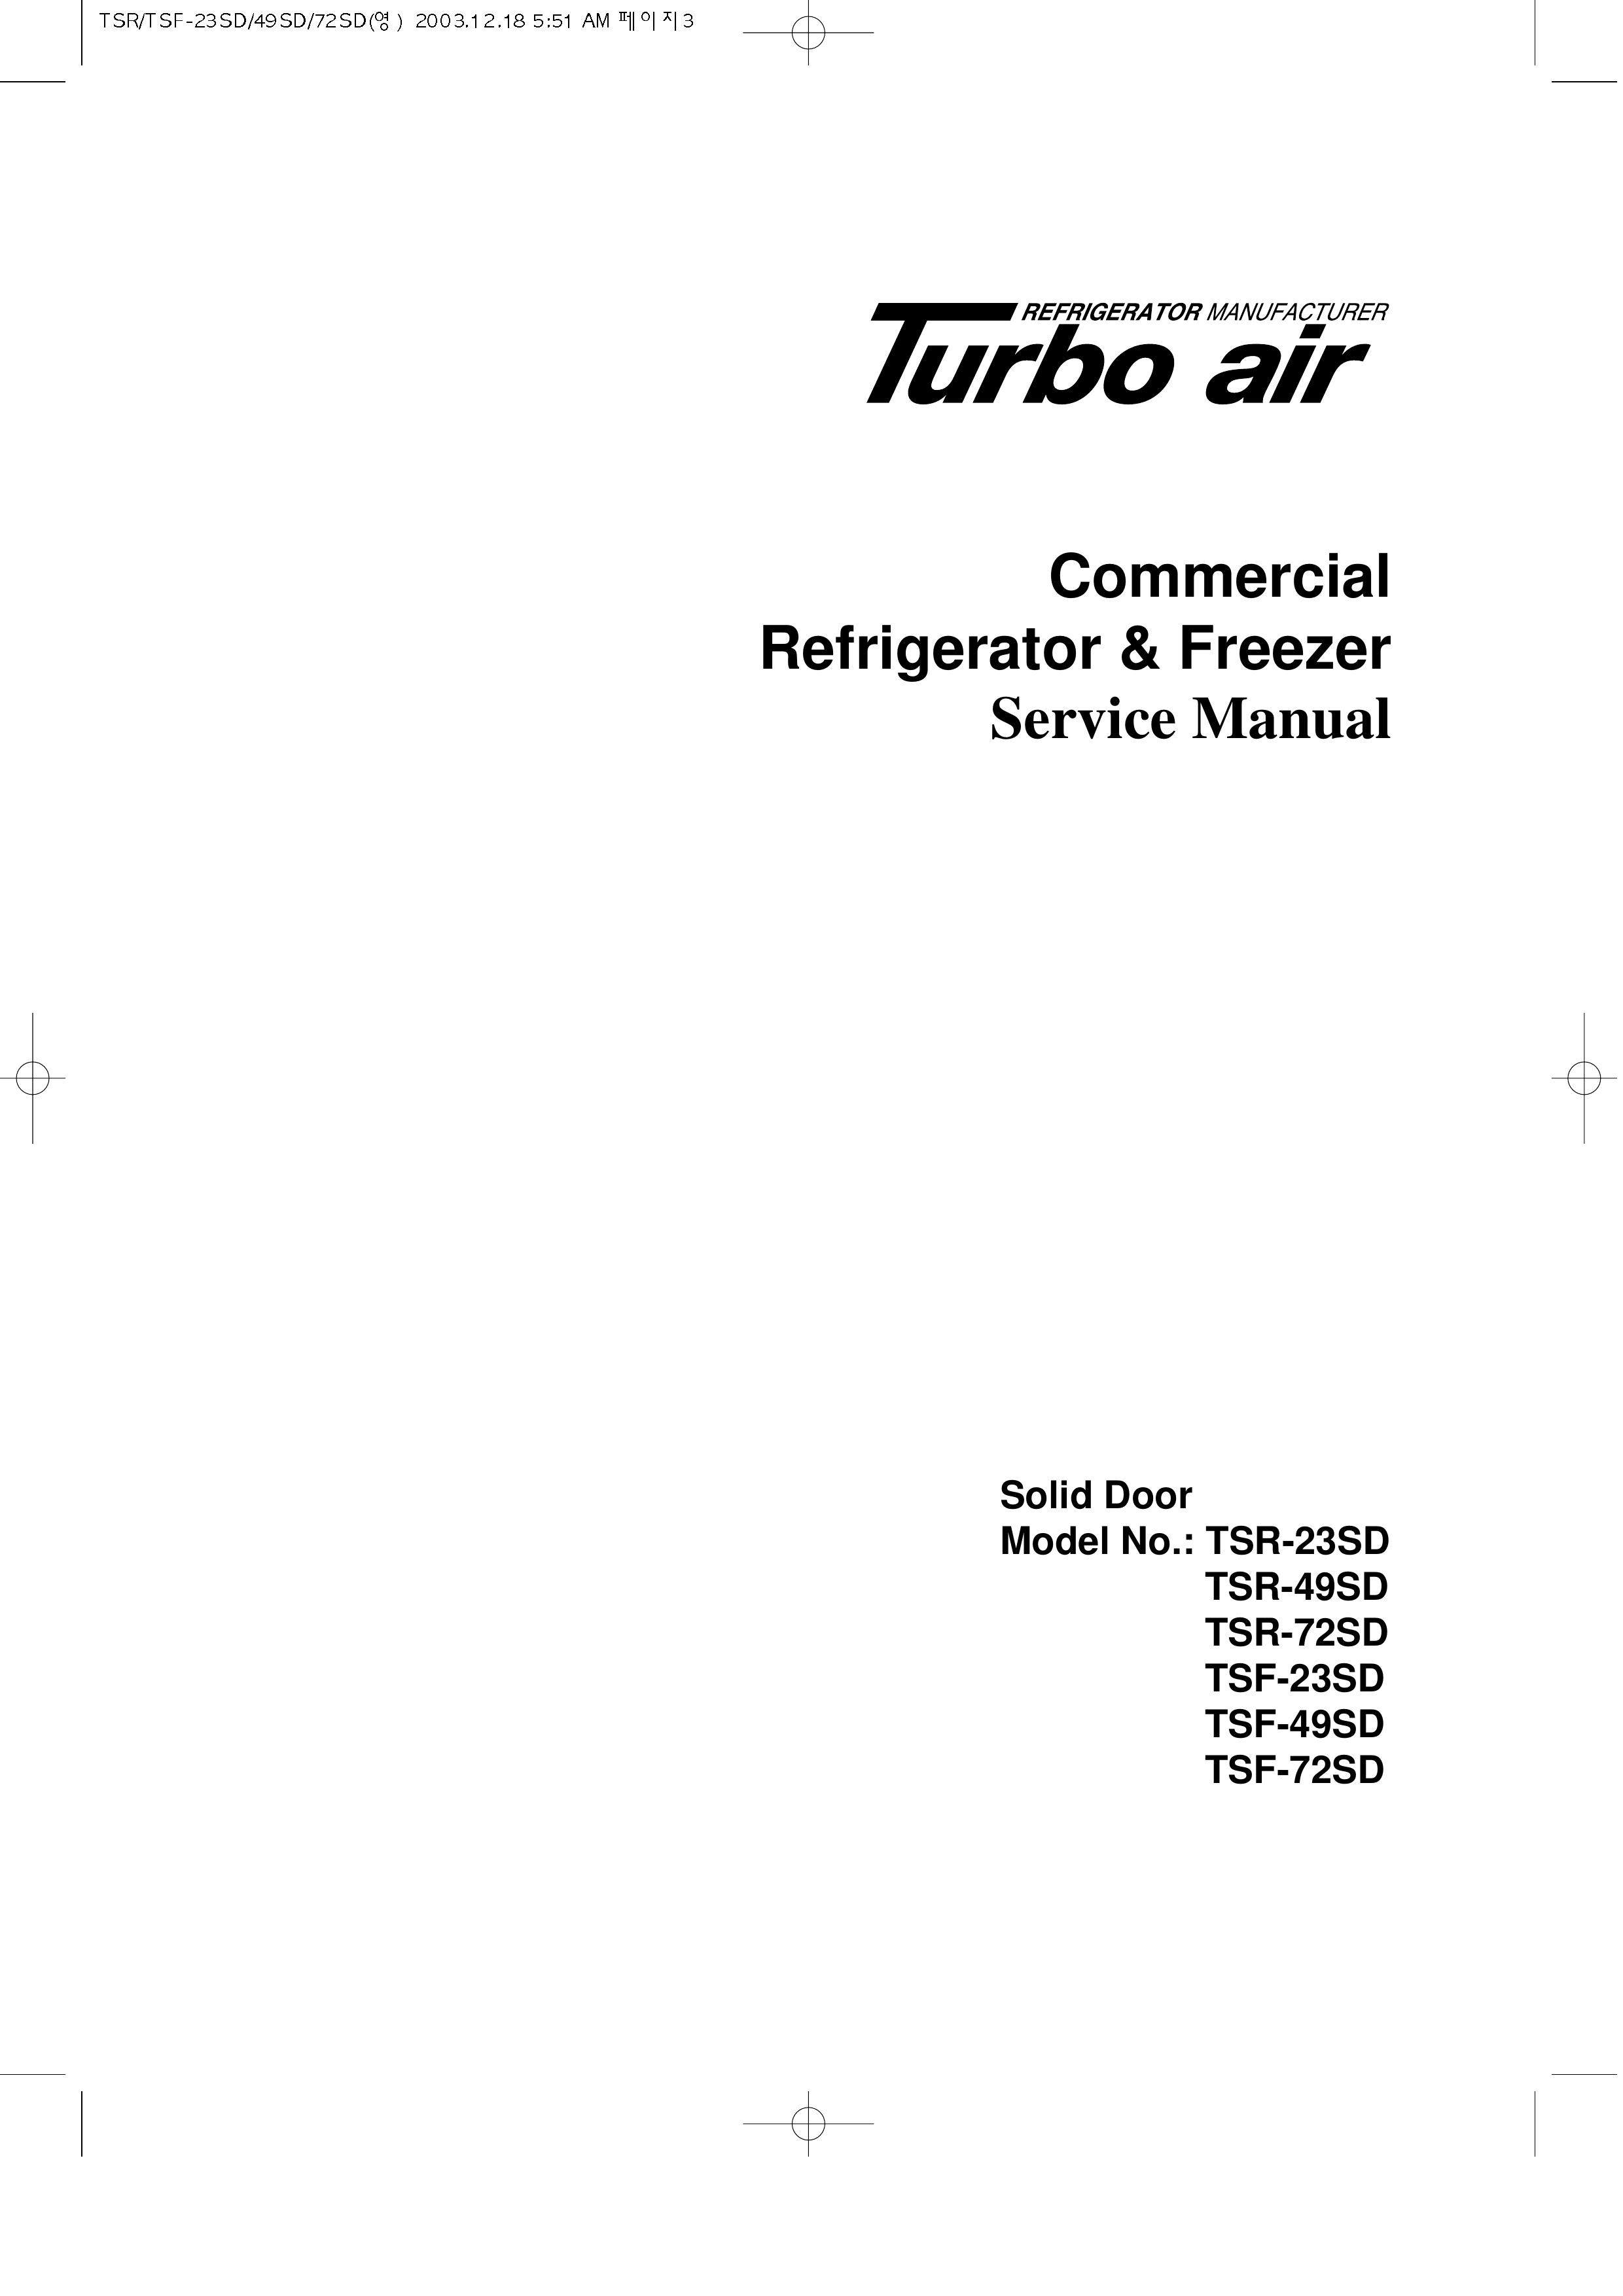 Turbo Air TSF-72SD Refrigerator User Manual